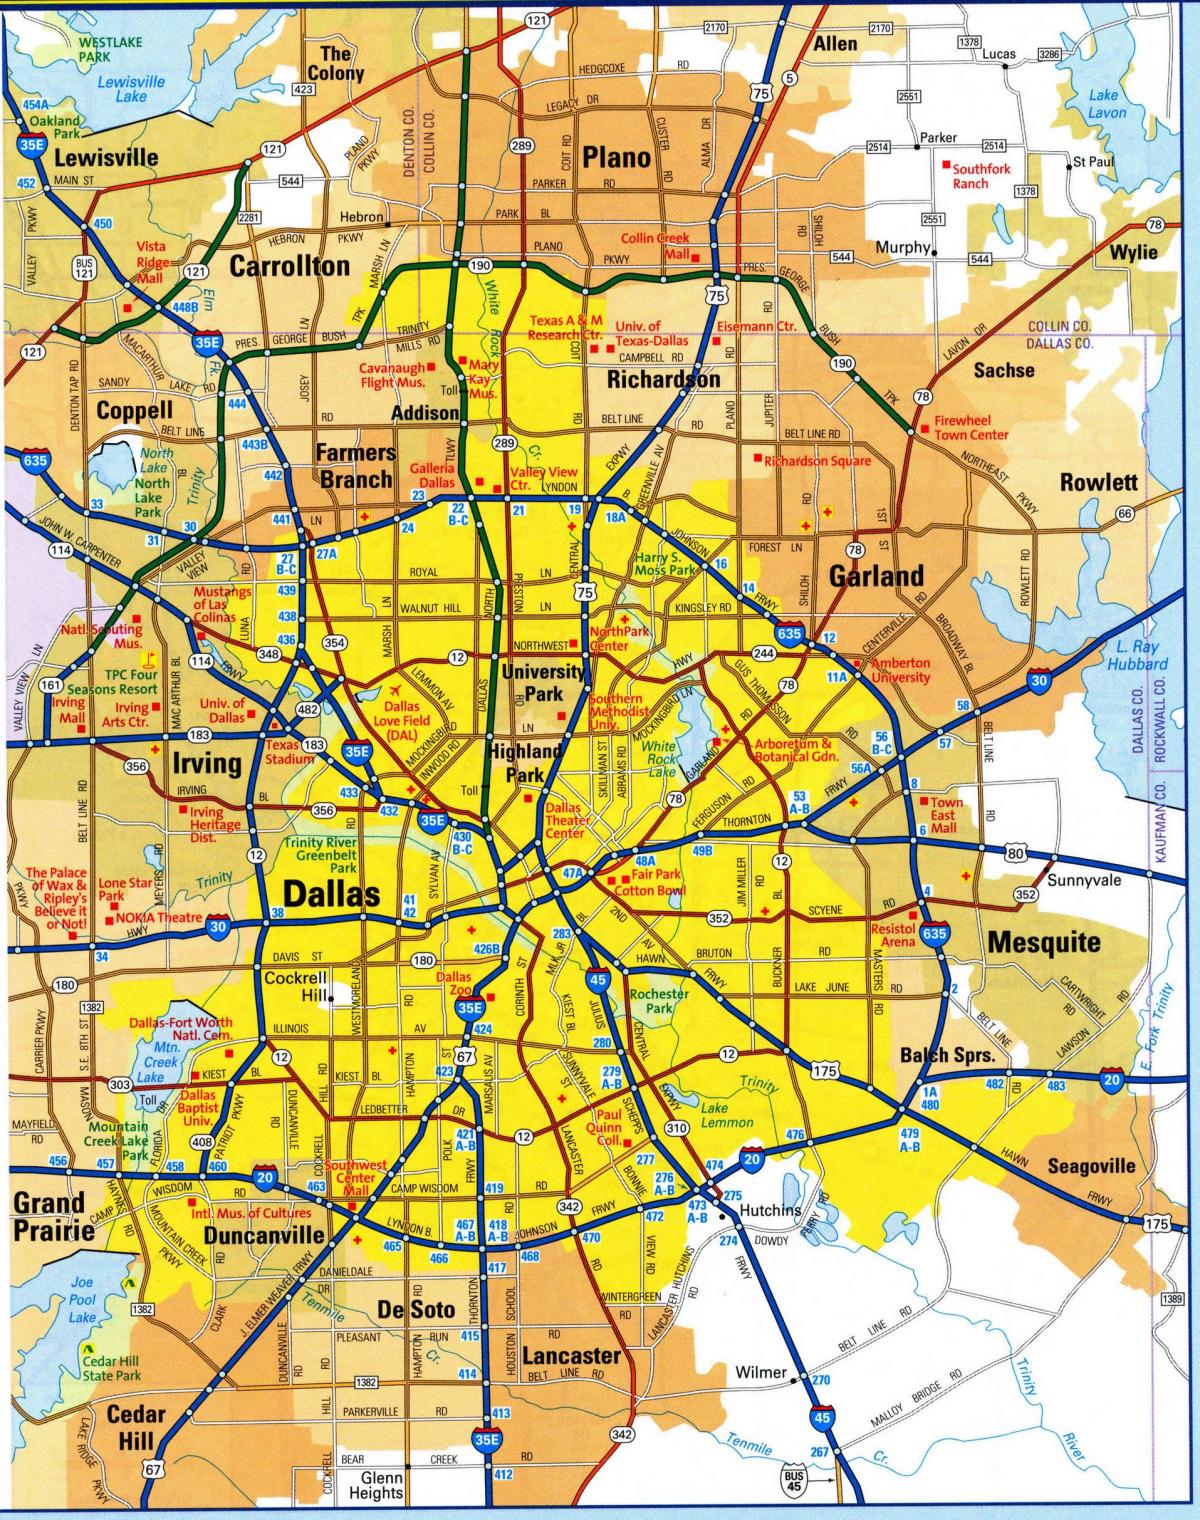 Dallas stadsplattegrond